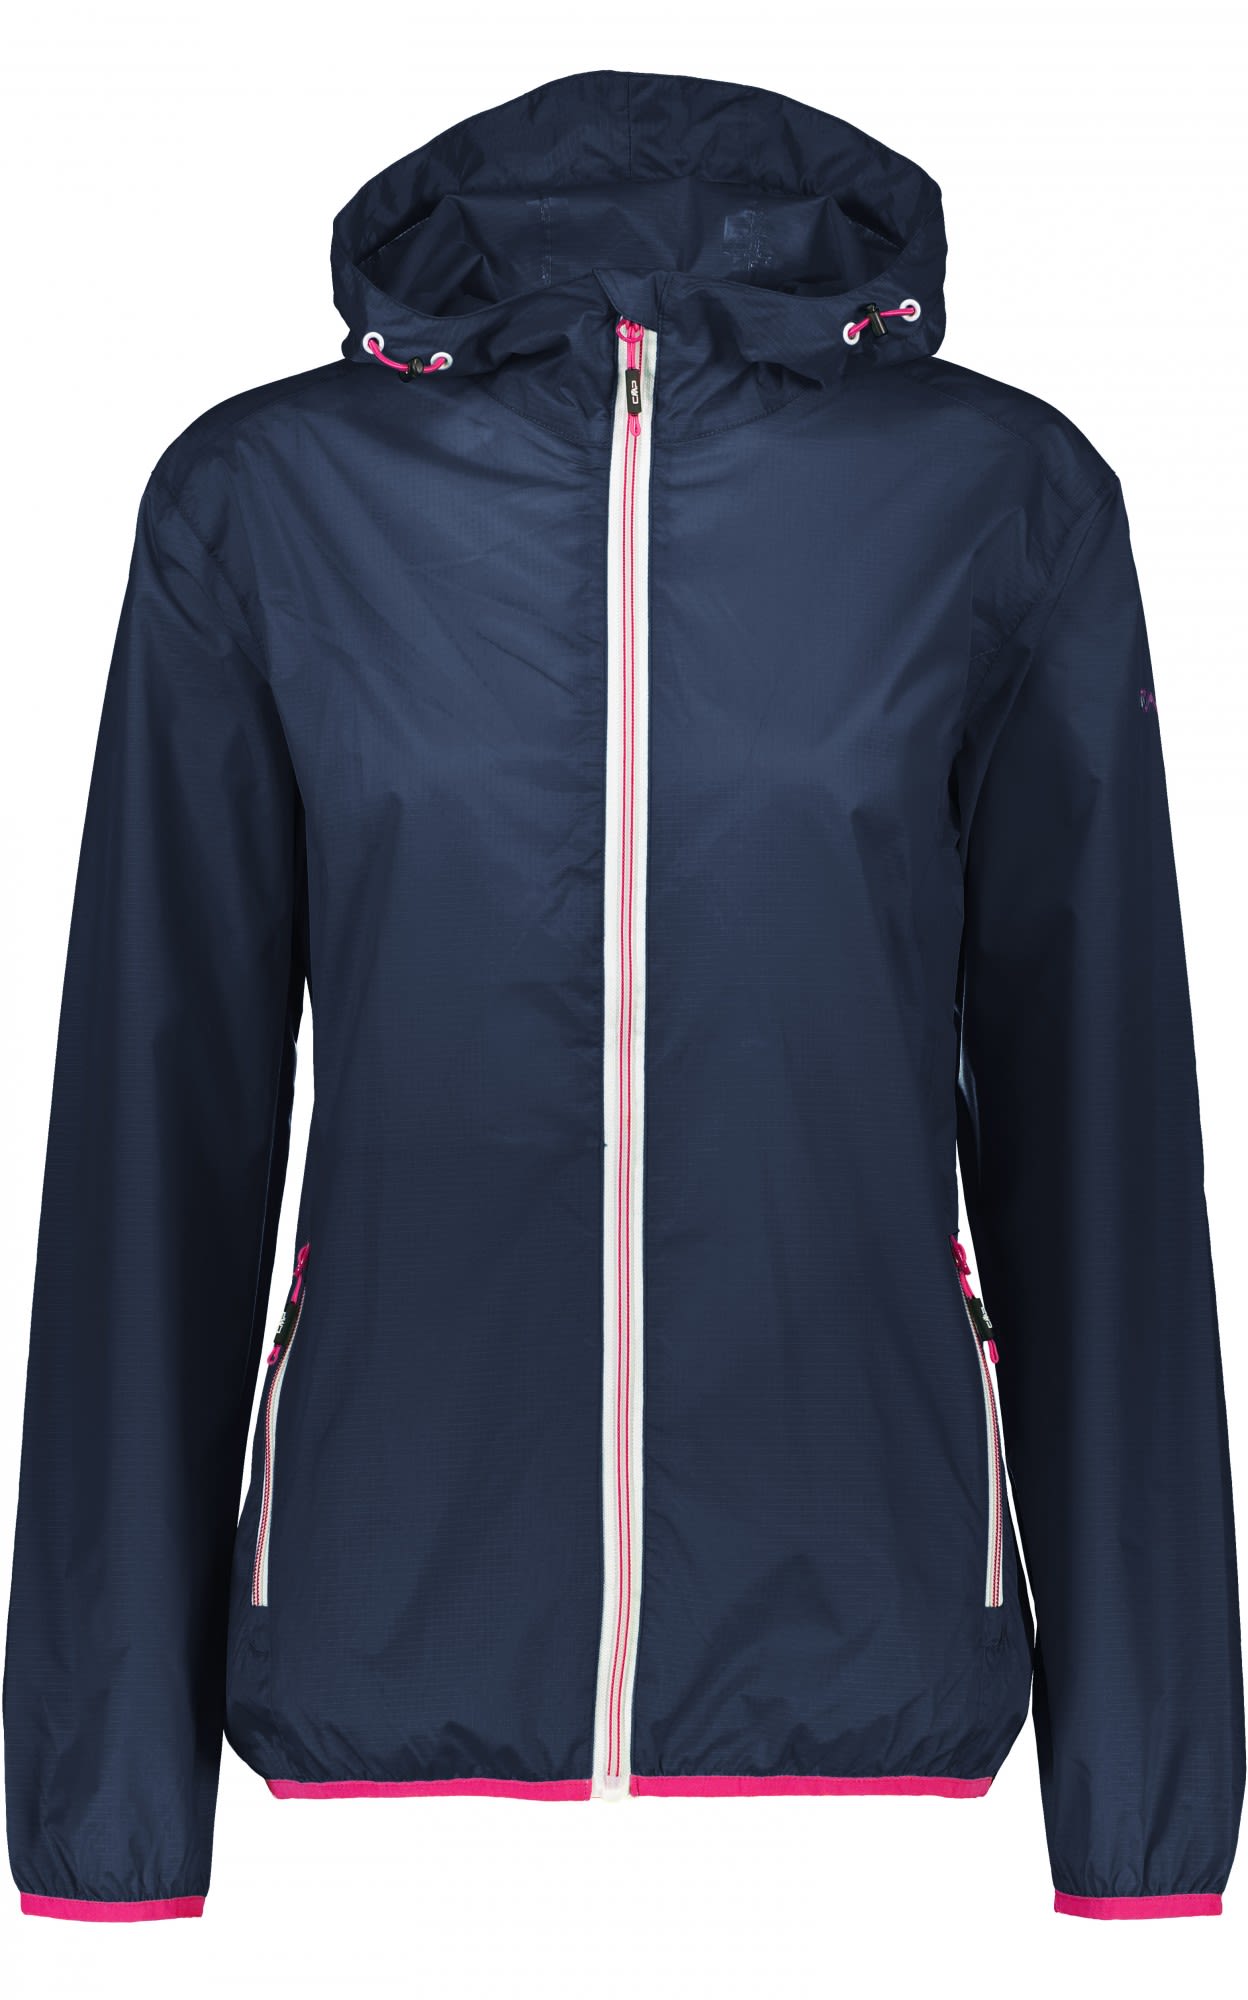 CMP FIX Hood Jacket Ripstop Blau- Female Regenjacken und Hardshells- Grsse 34 - Farbe Navy